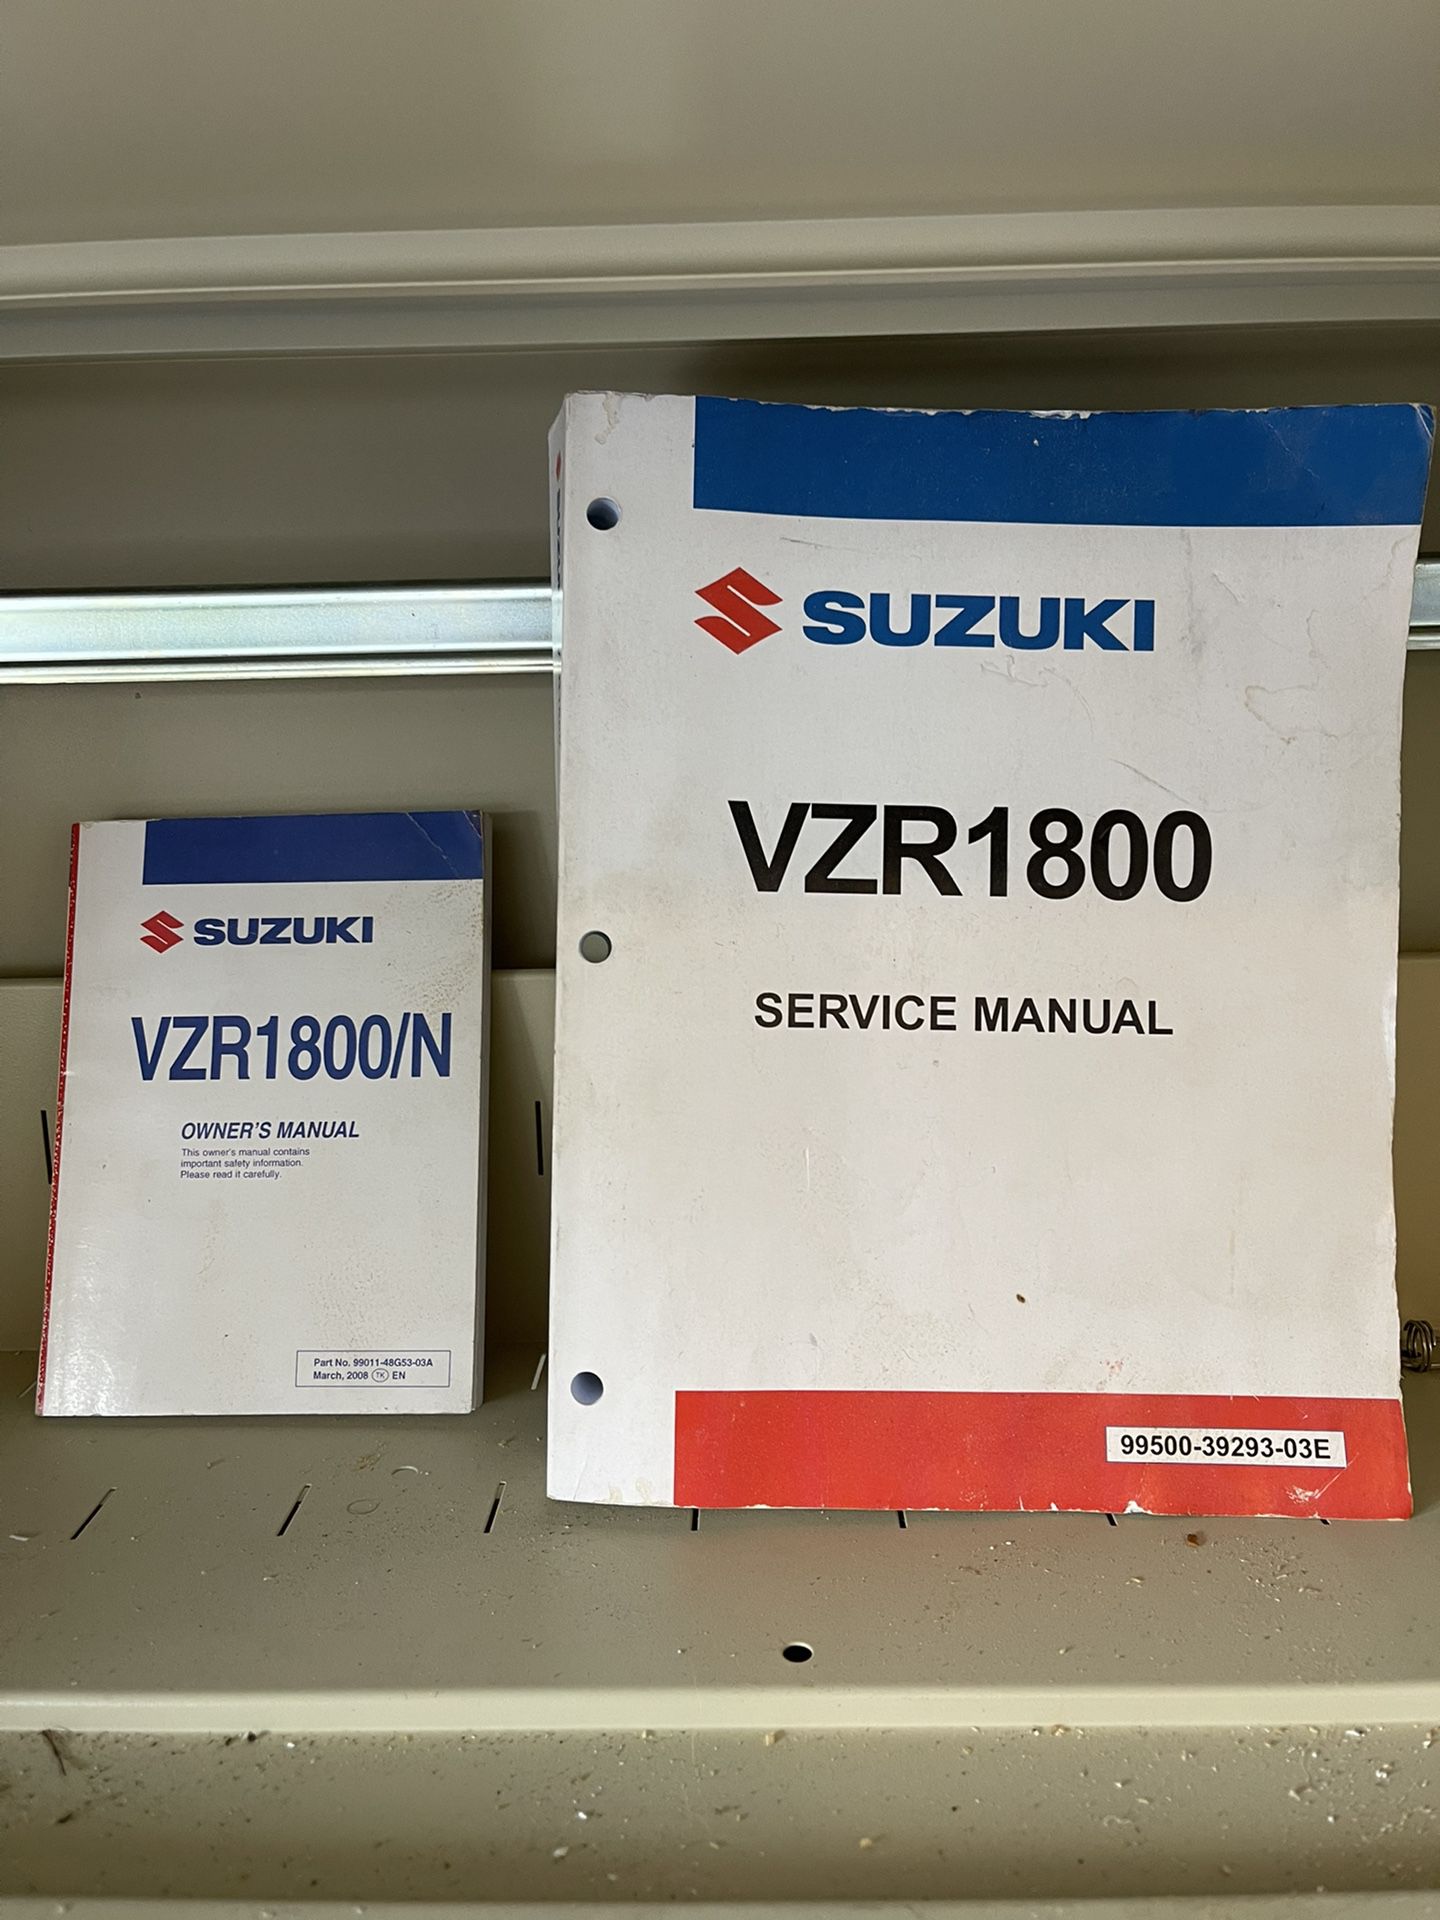 Suzuki M109R (VZR1800) Service Manual